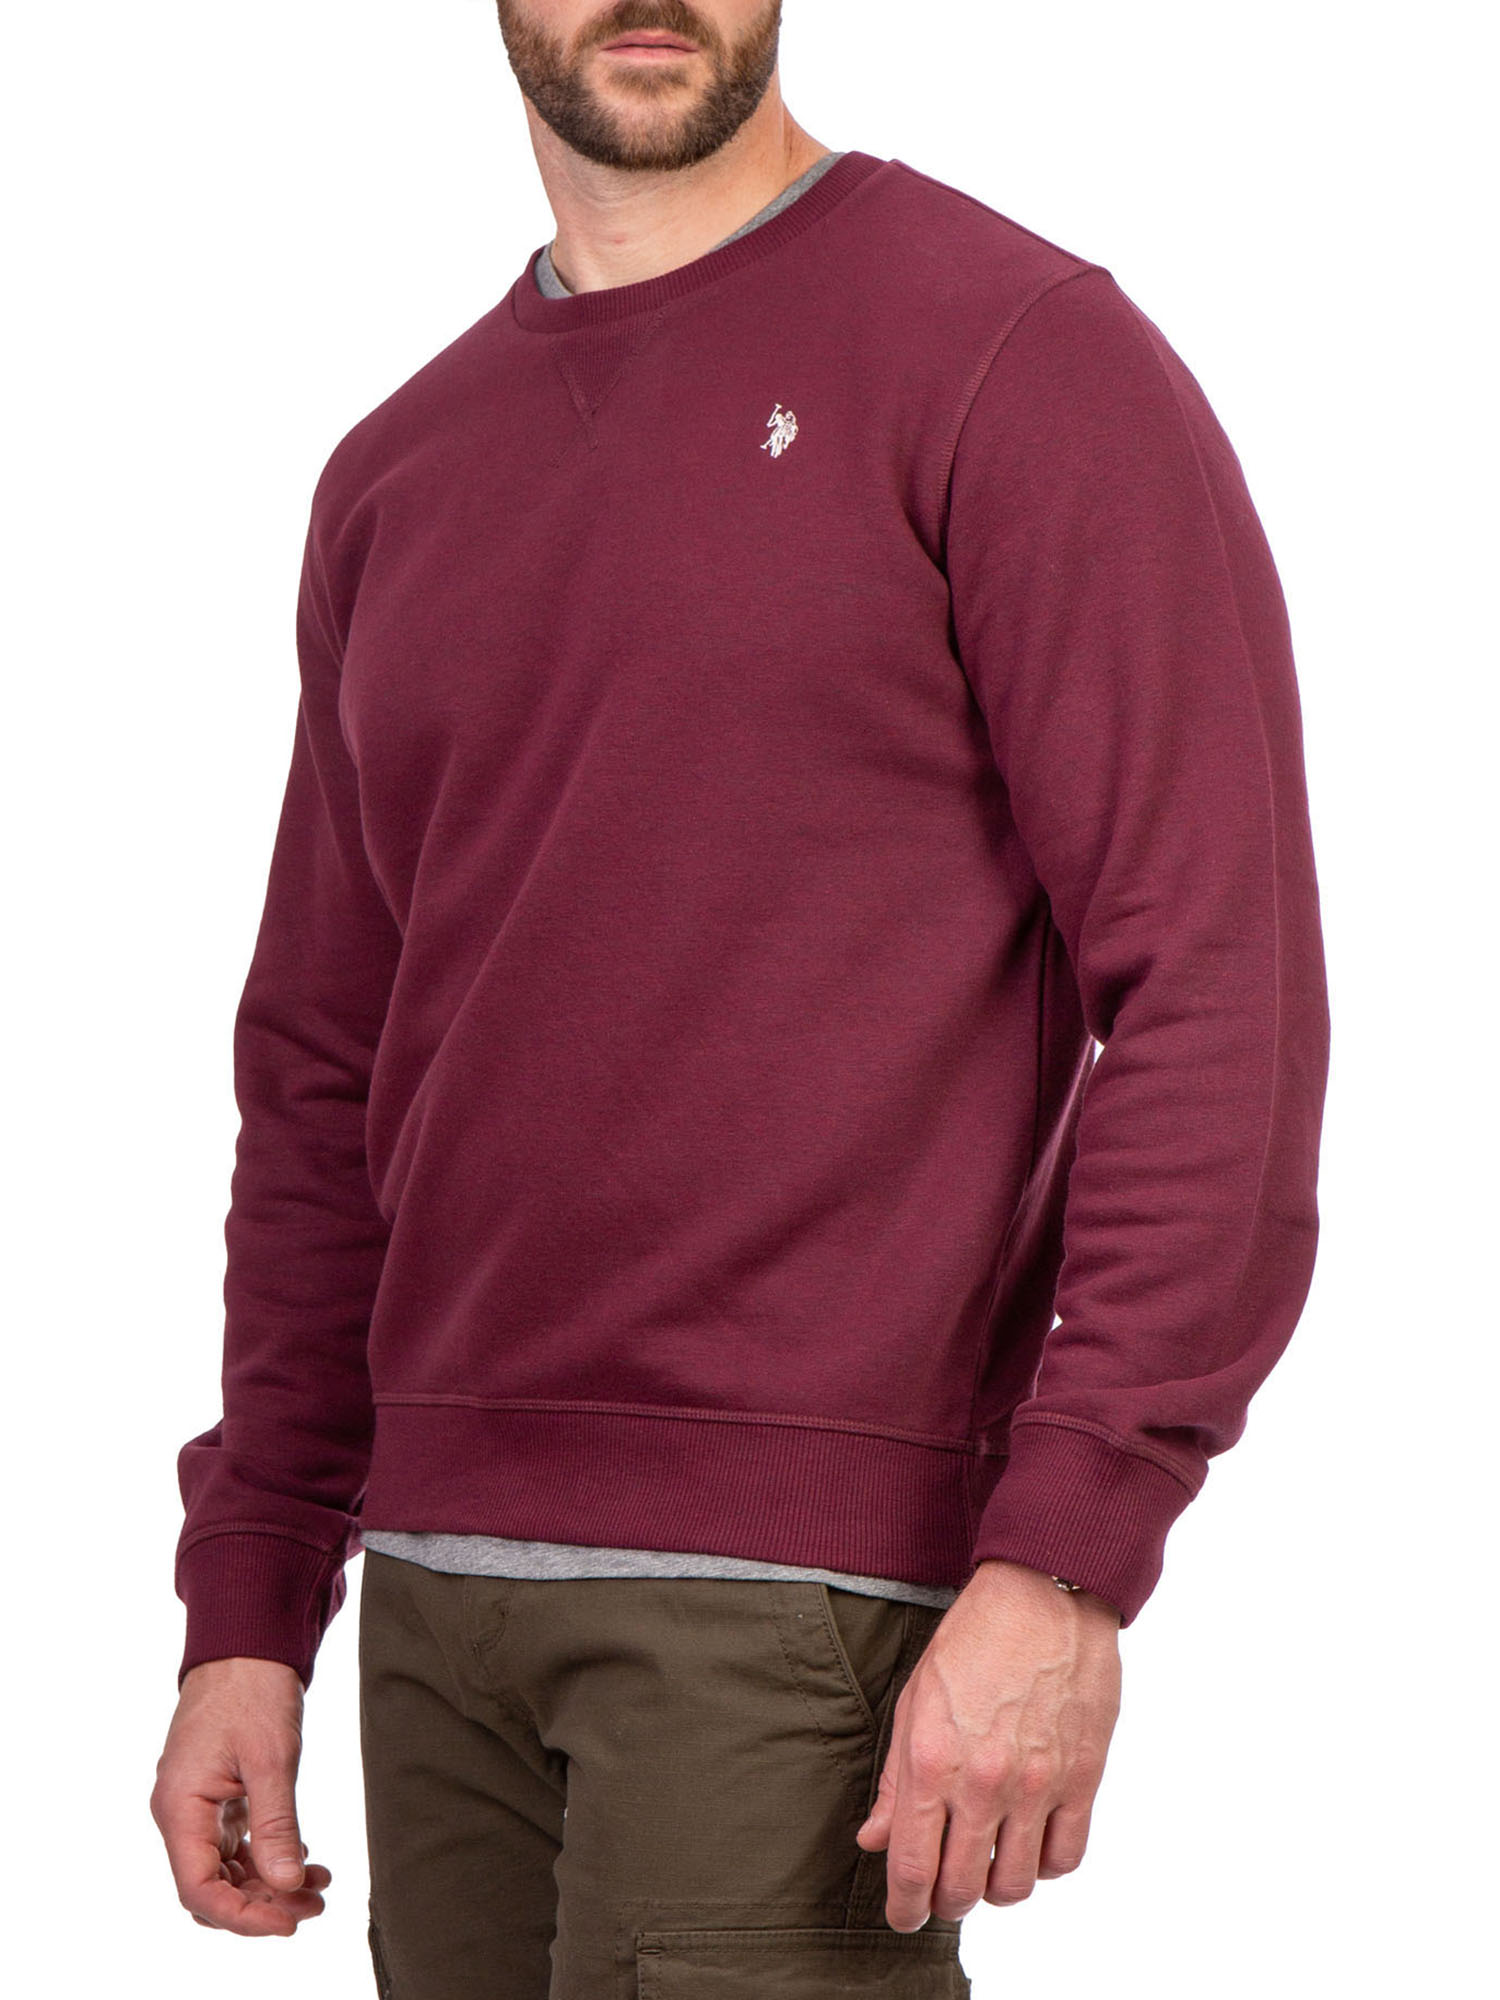 U.S. Polo Assn. Men's Knit Sweater Shirt - image 2 of 4